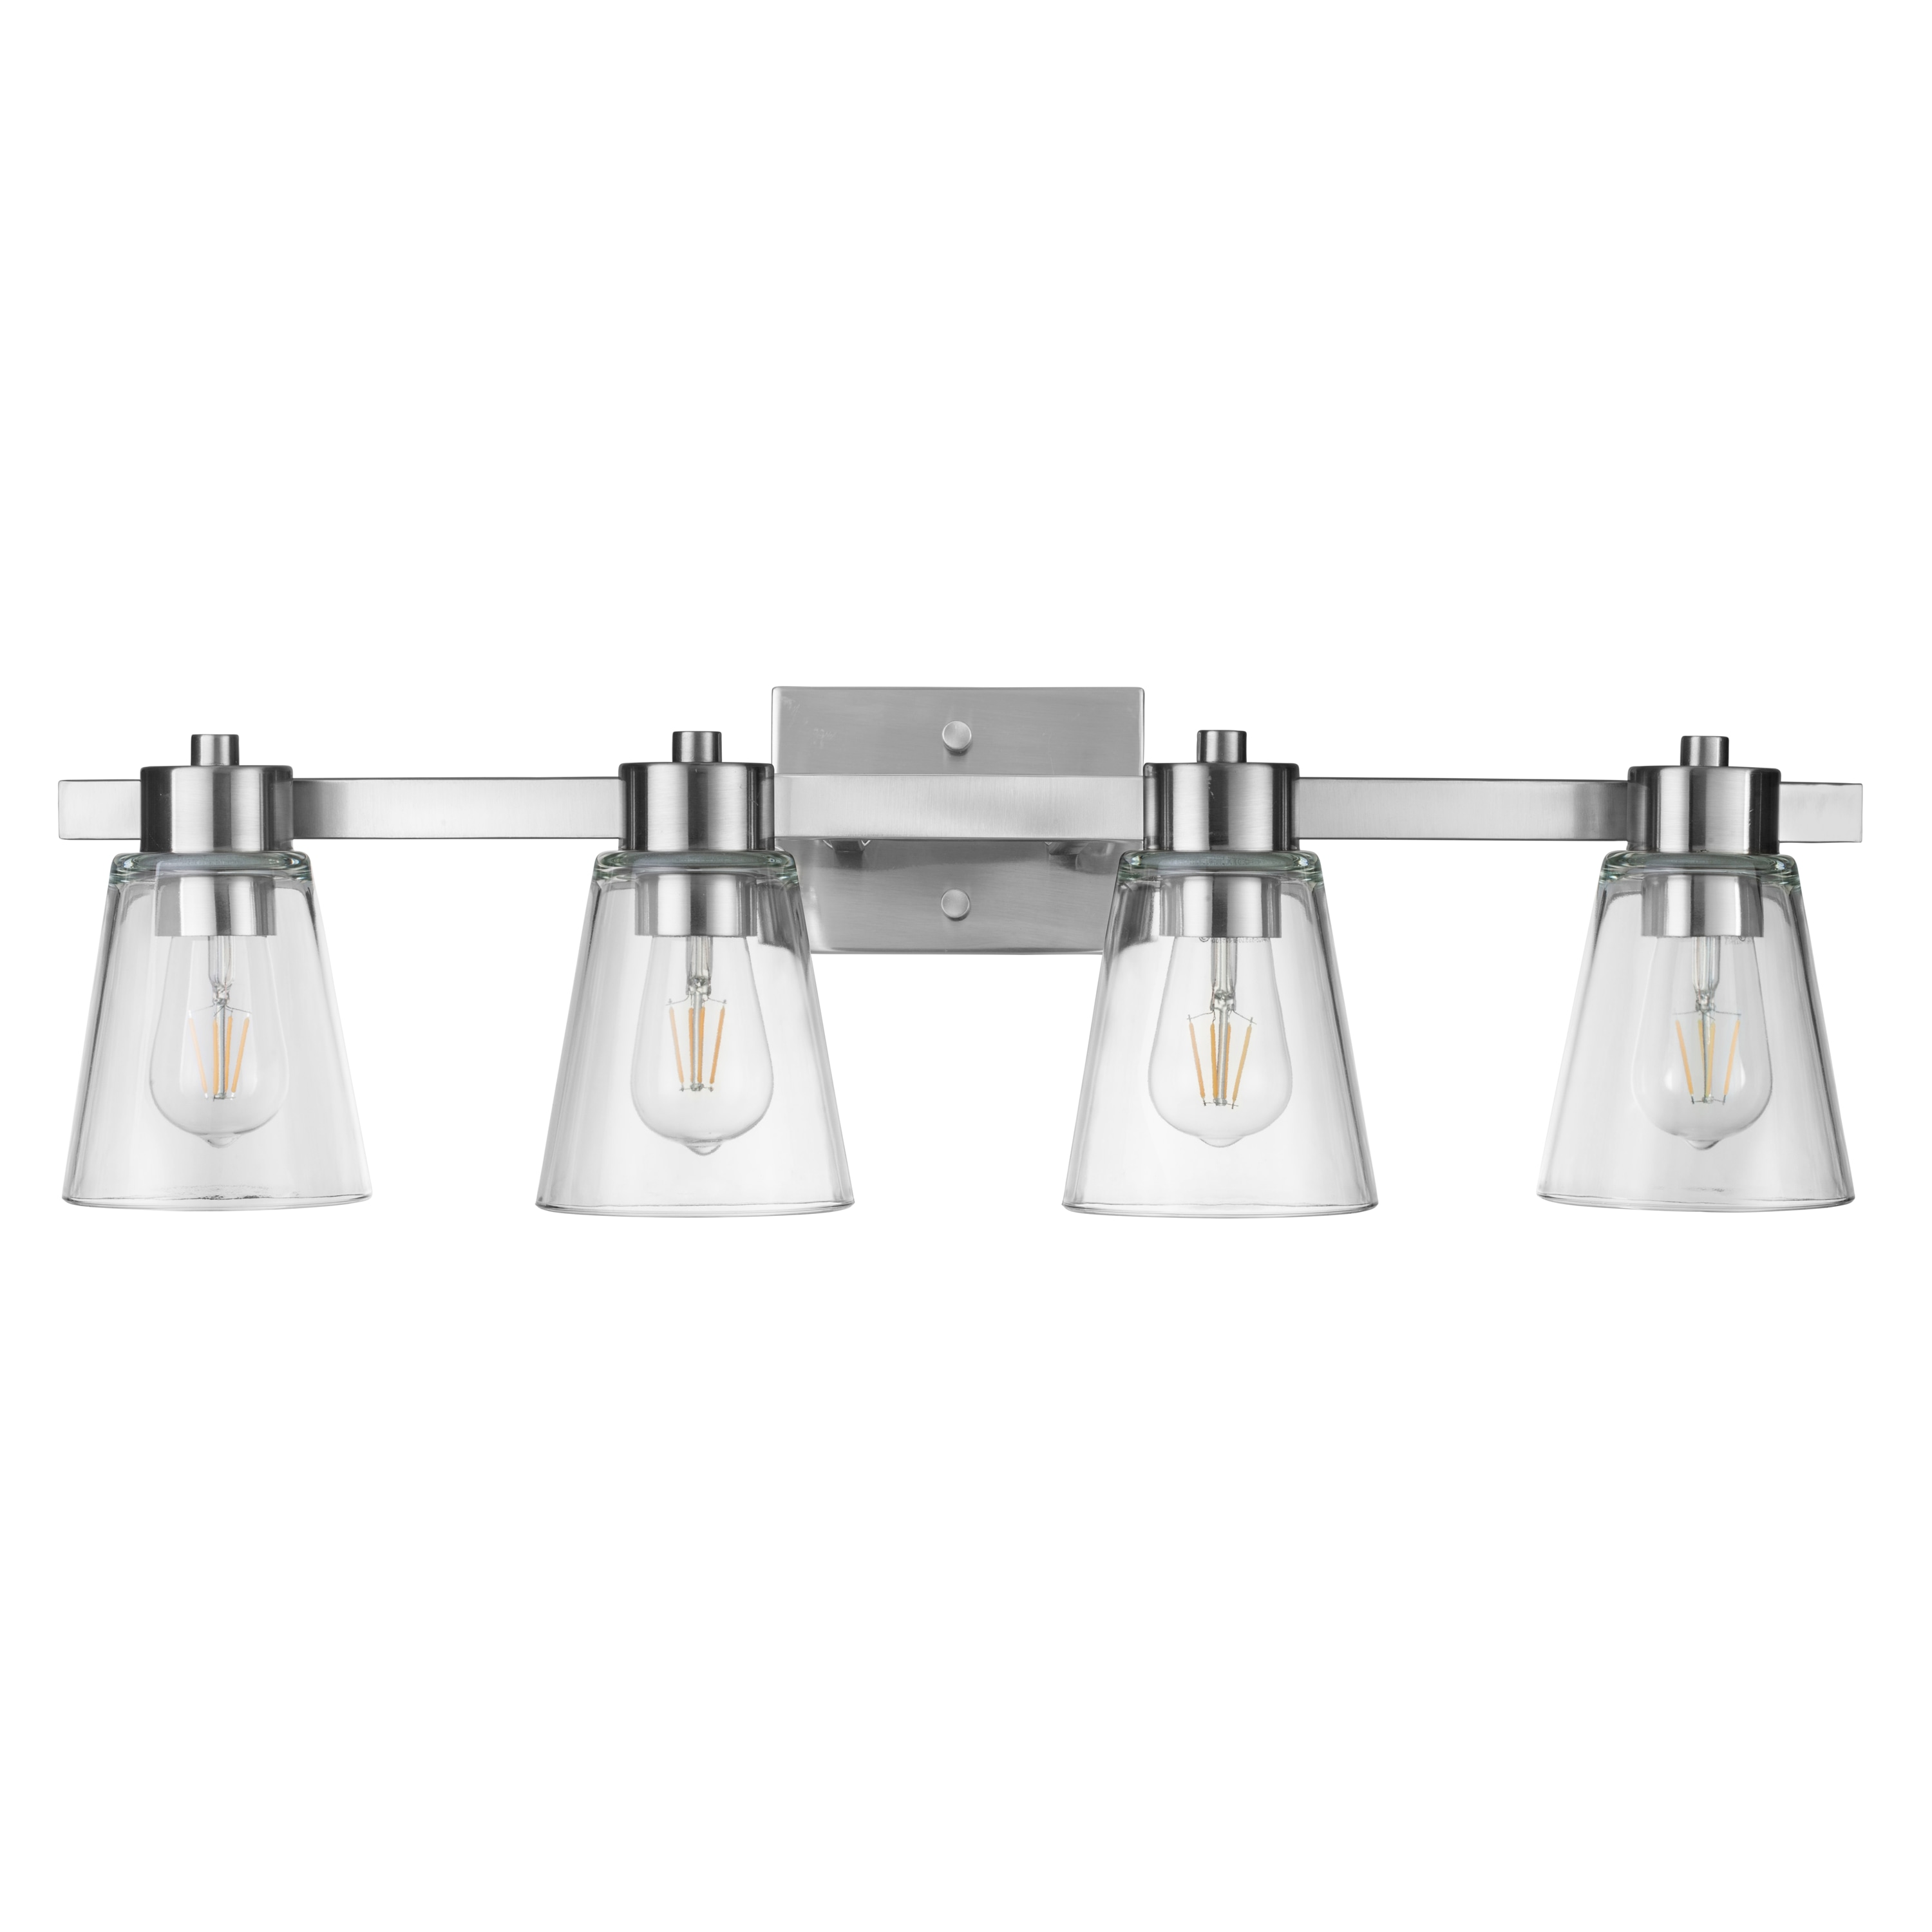 Prominence Home Fairendale 4-Light Brushed Nickel LED Modern/Contemporary Vanity Light